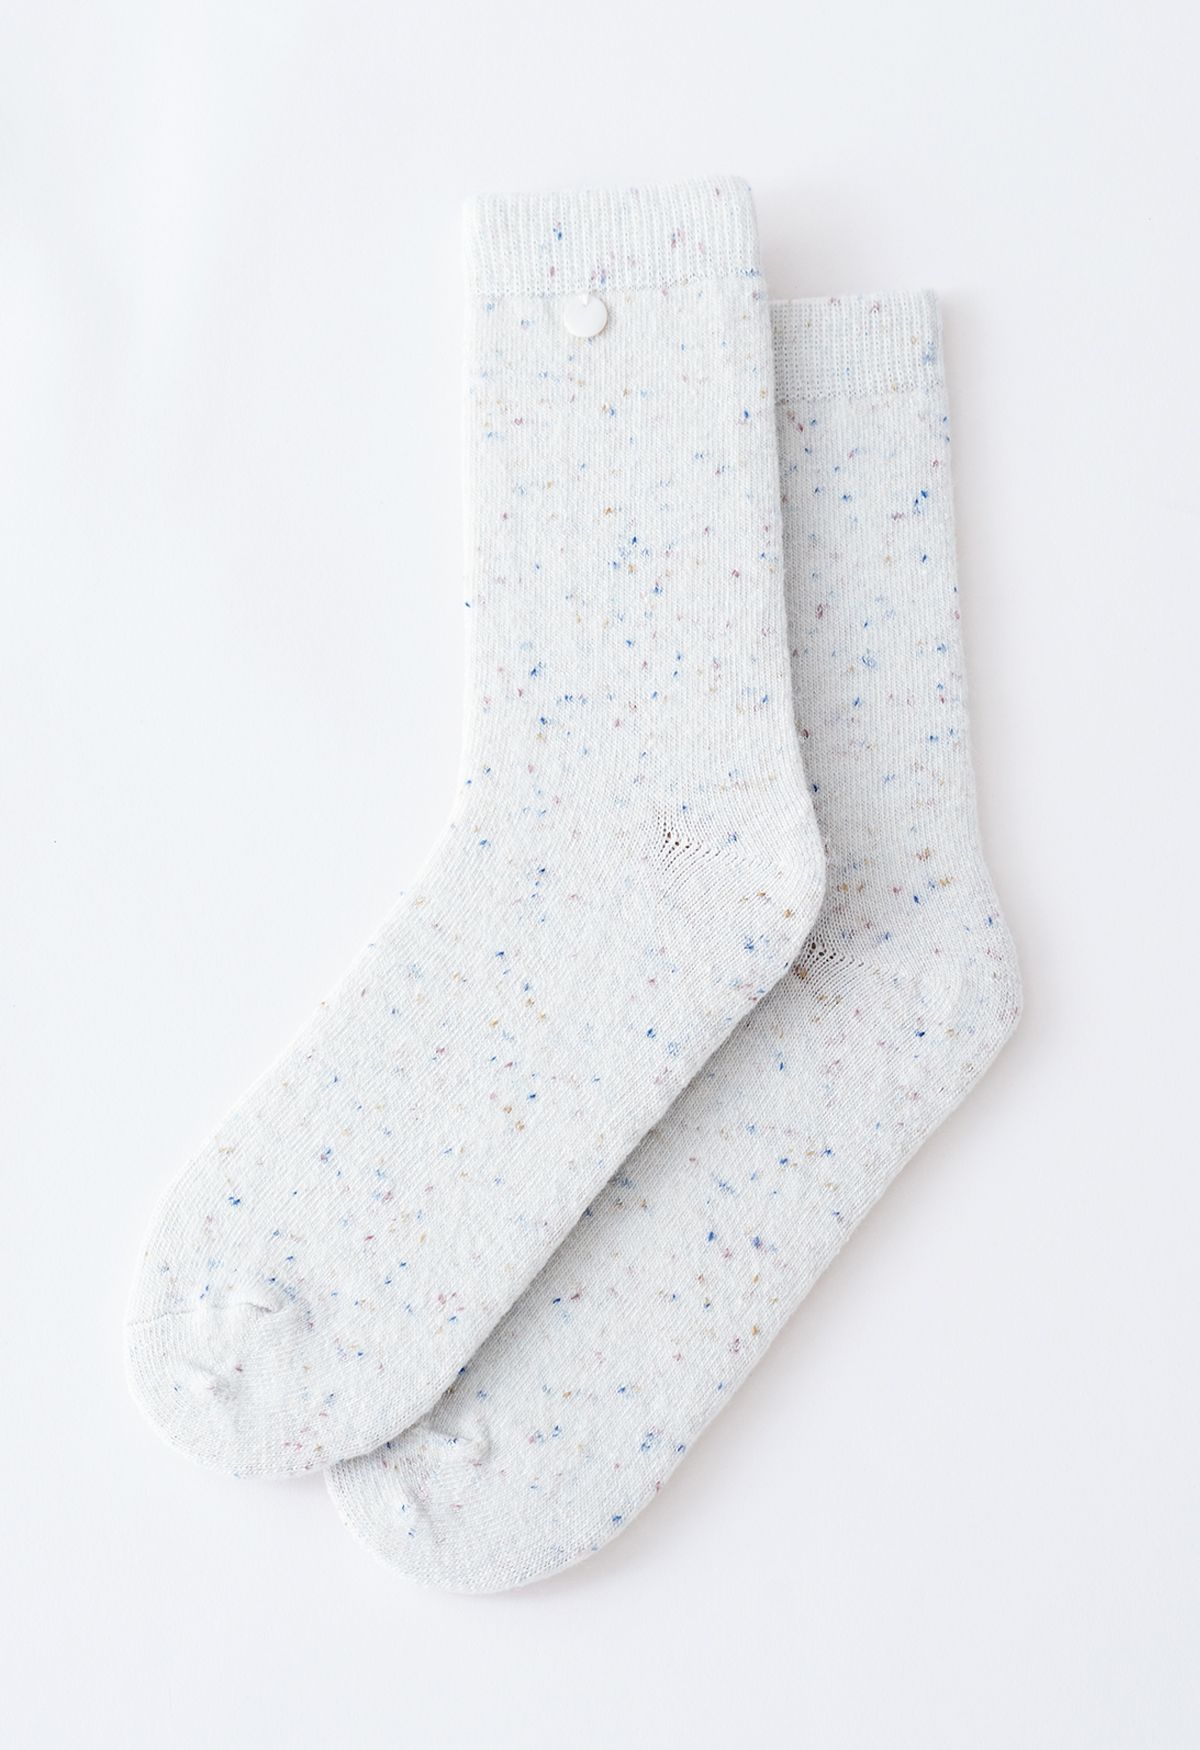 Mix Color Dots Crew-Socken aus Wollmischung in Creme